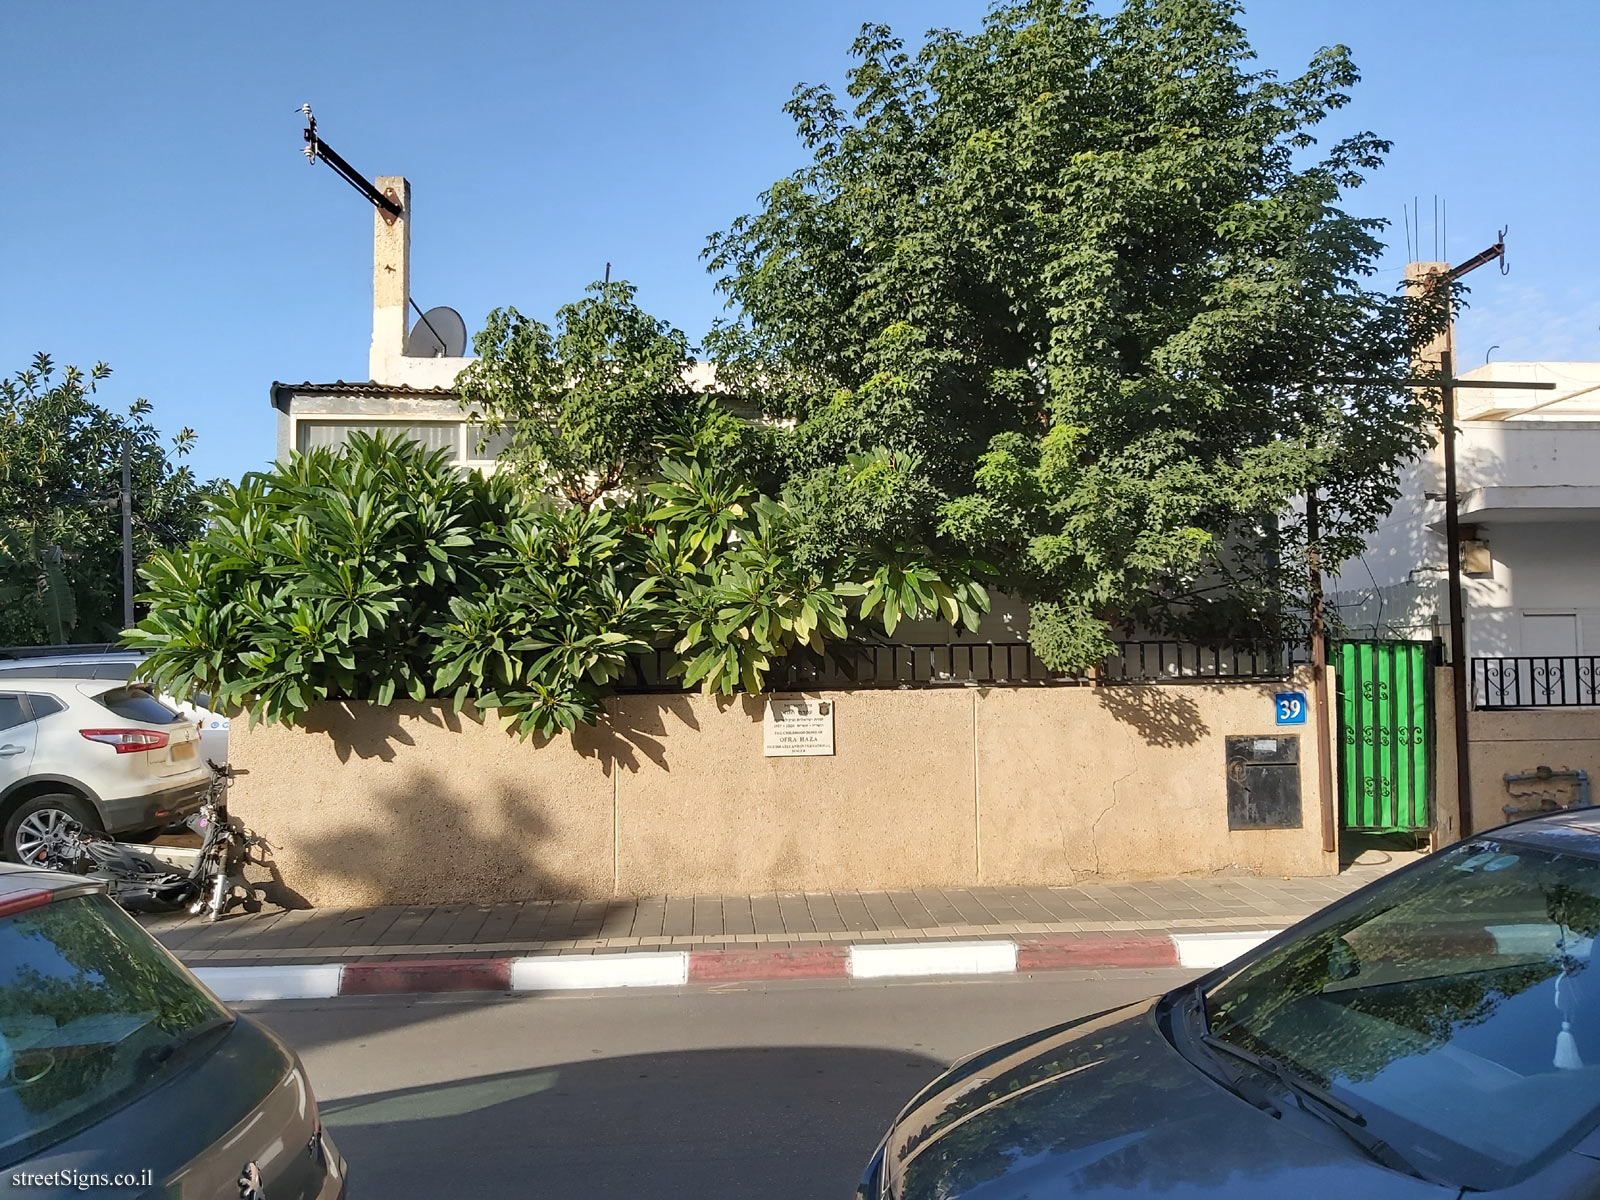 The Childhood home of Ofra Haza - Bo’az St 39, Tel Aviv-Yafo, Israel